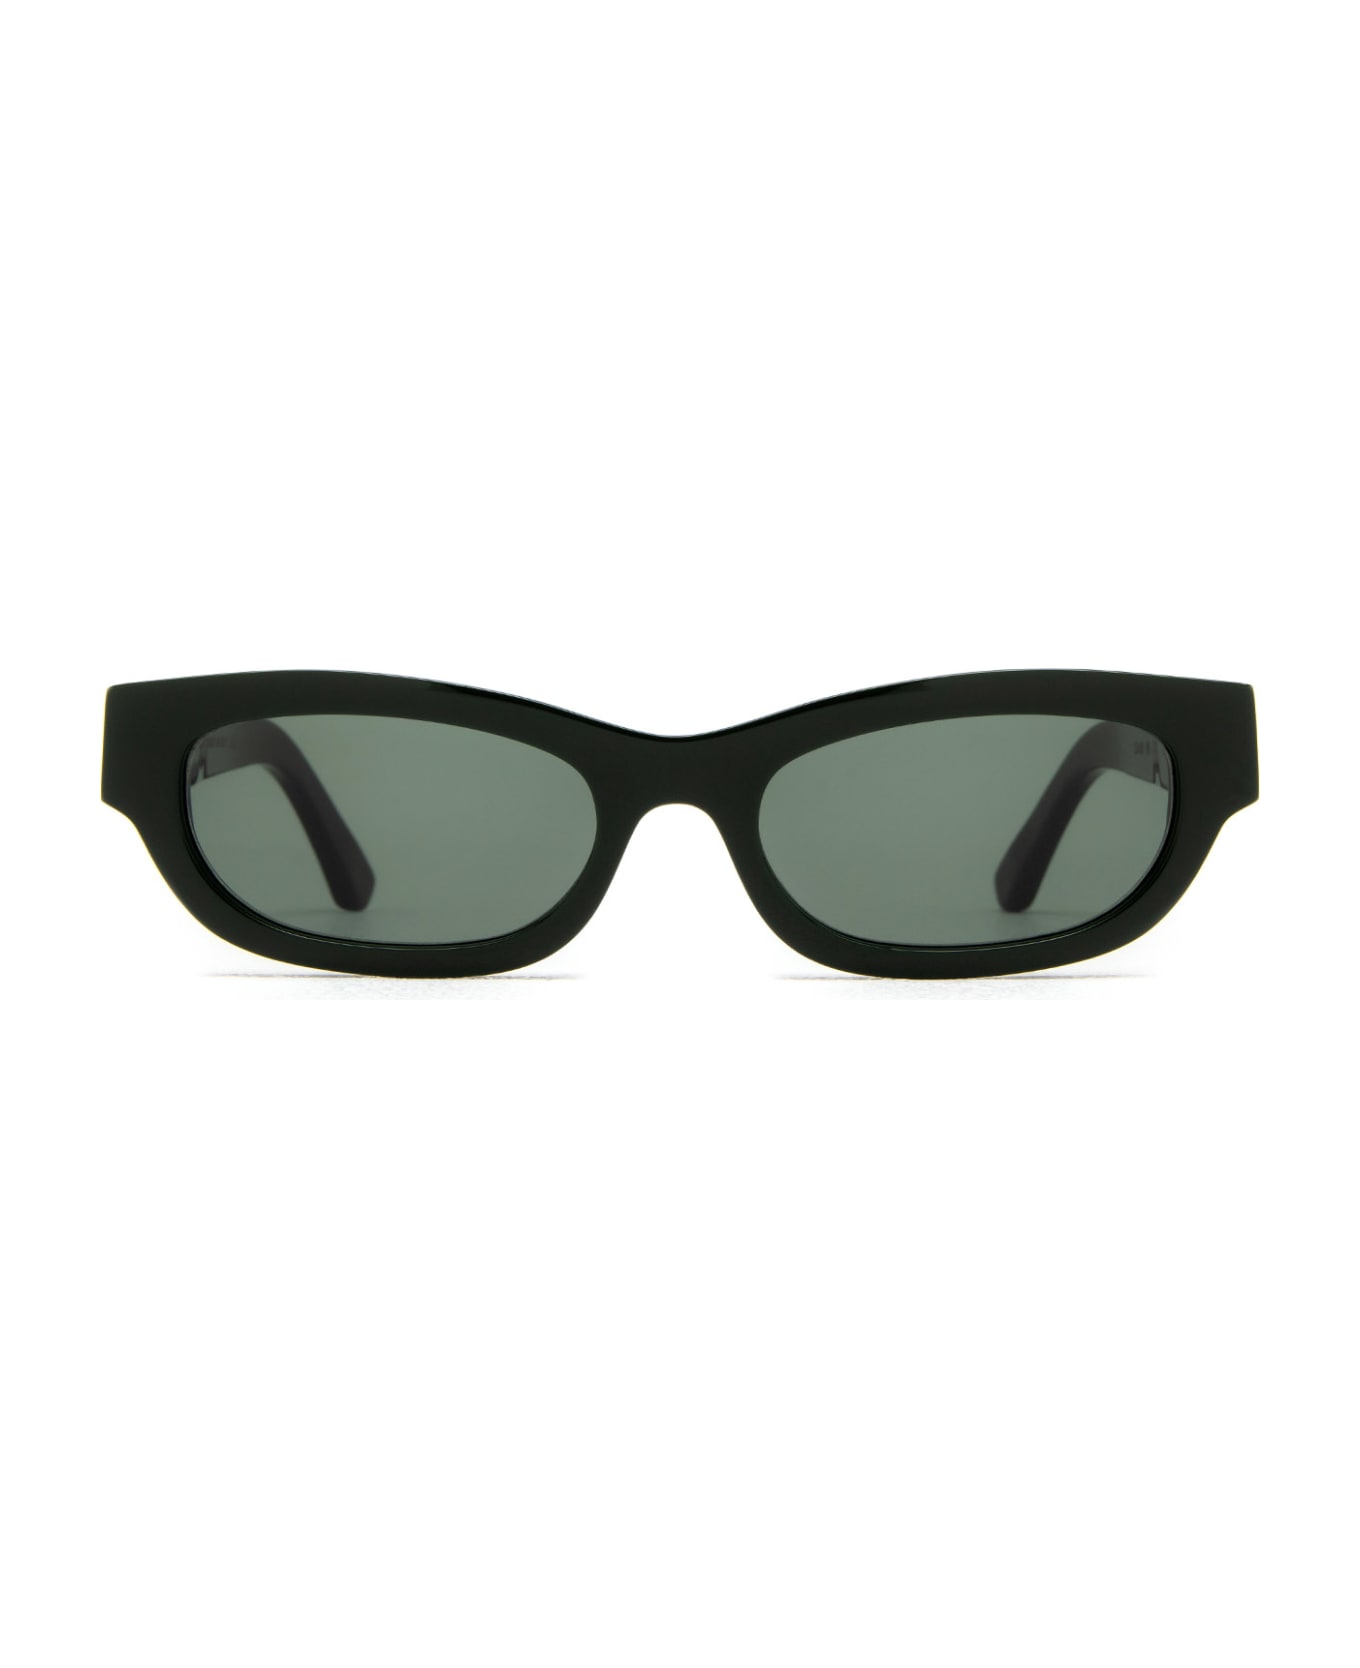 Huma Tojo Green Sunglasses - Green